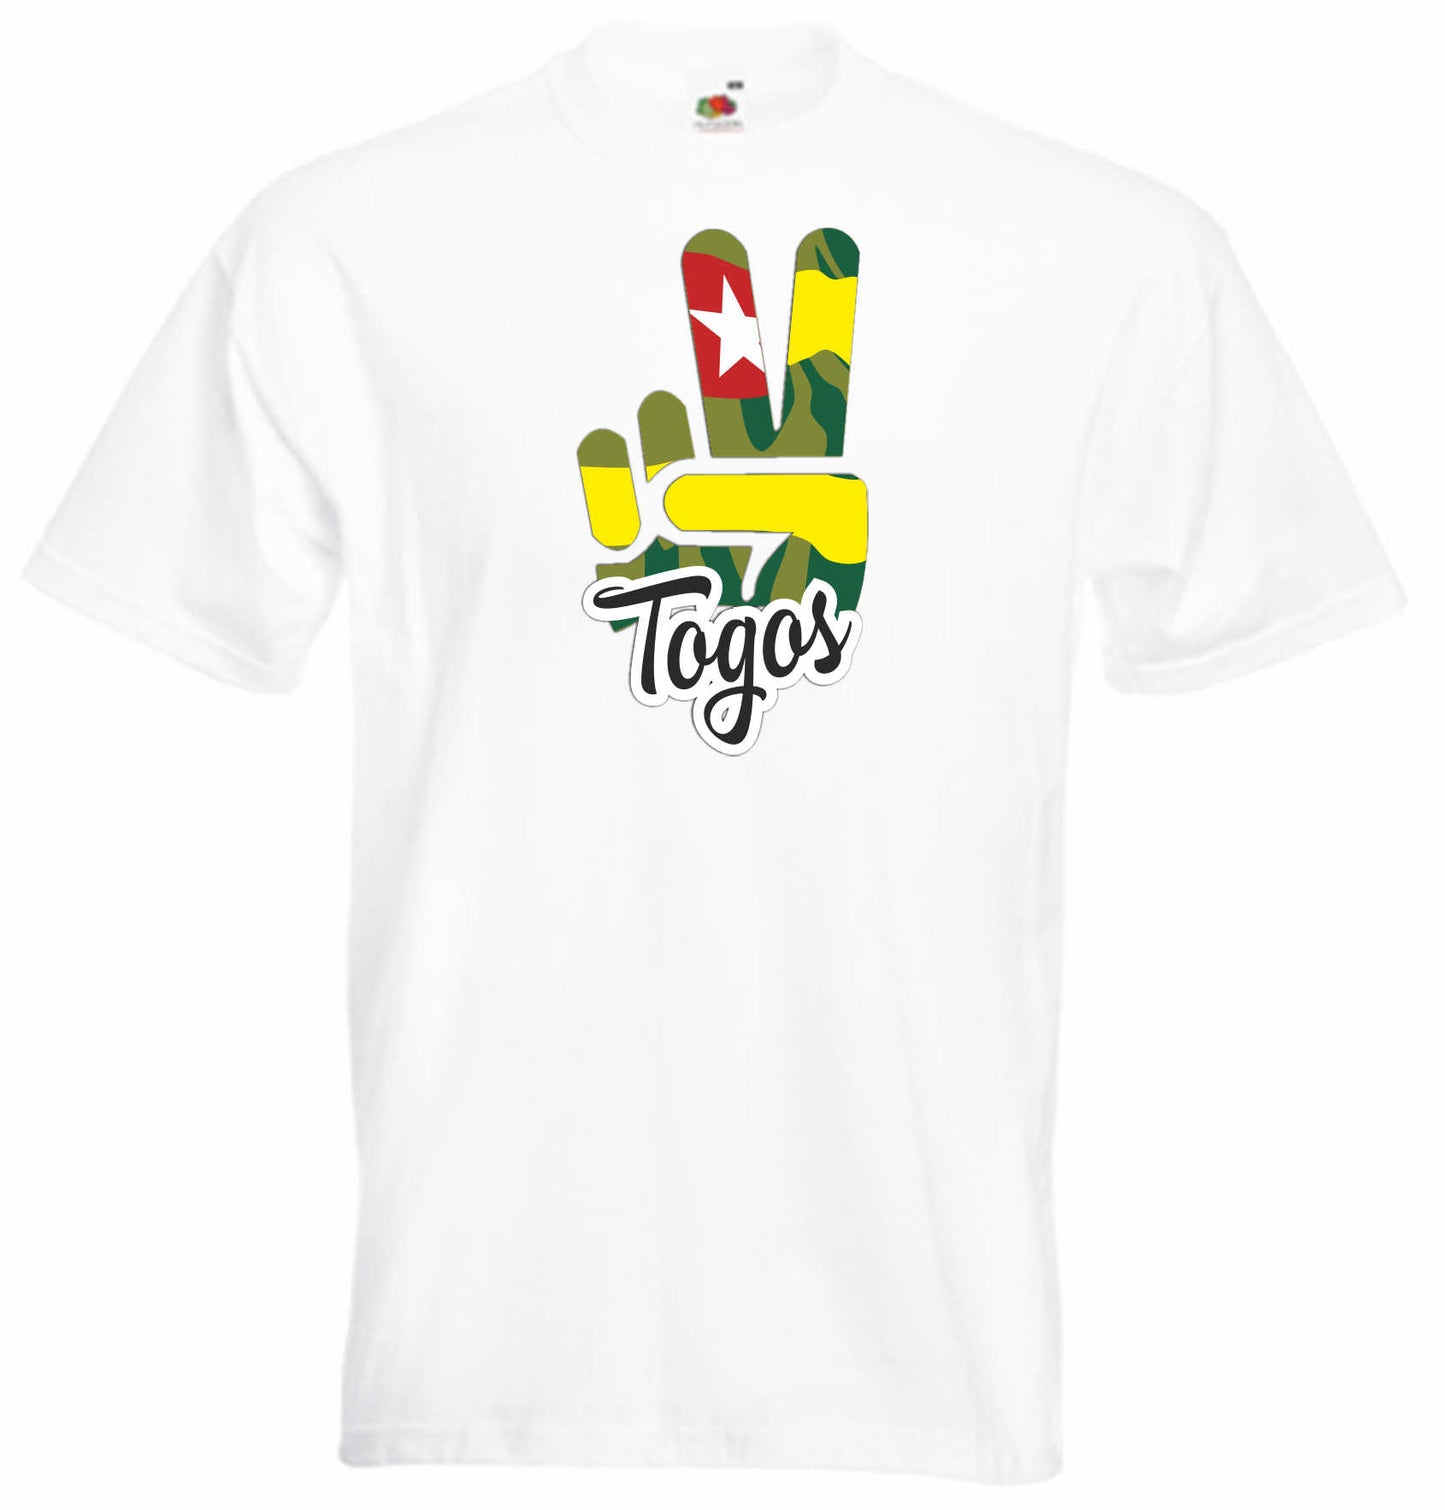 T-Shirt Herren - Victory - Flagge / Fahne - Togos - Sieg